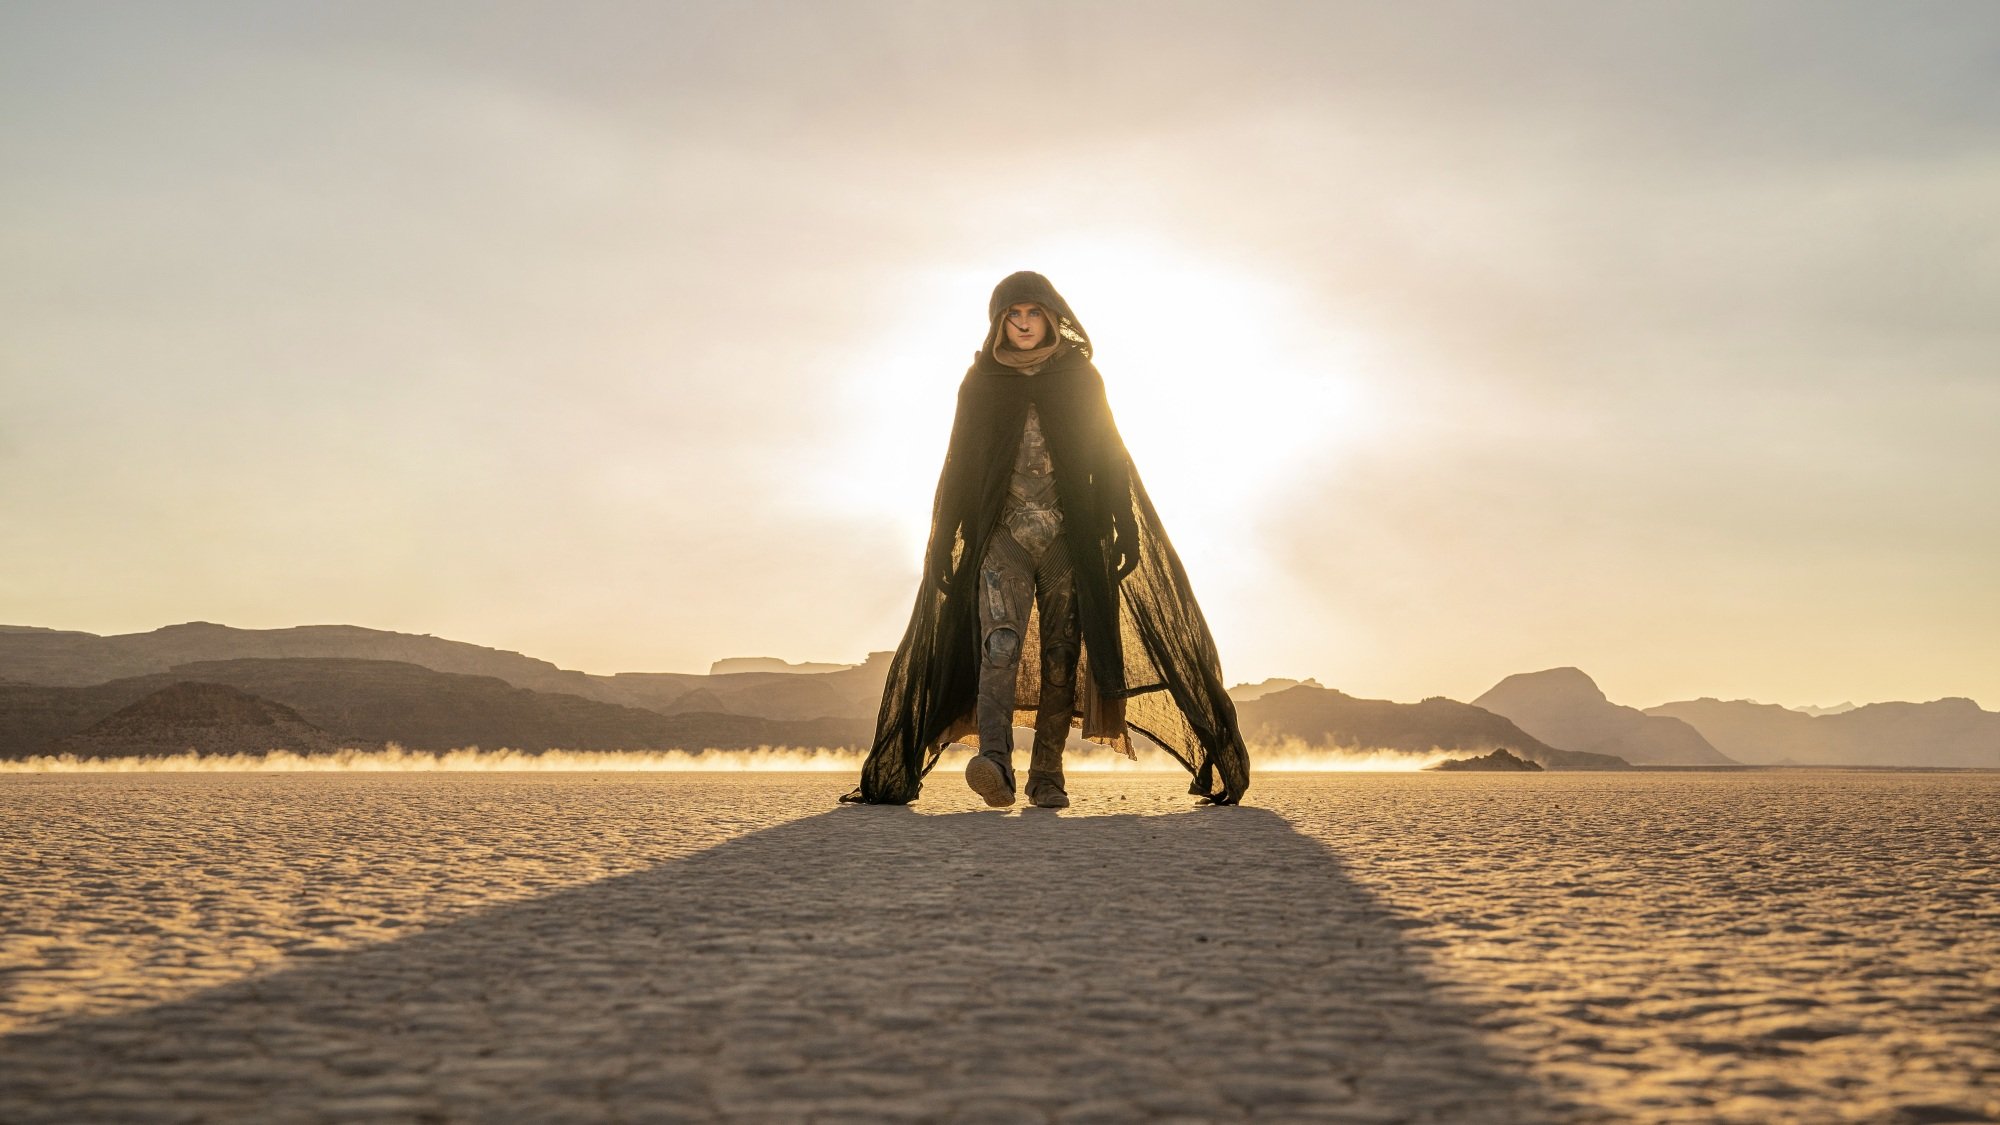 Paul Atreides walks through the desert in a cloak and stillsuit.